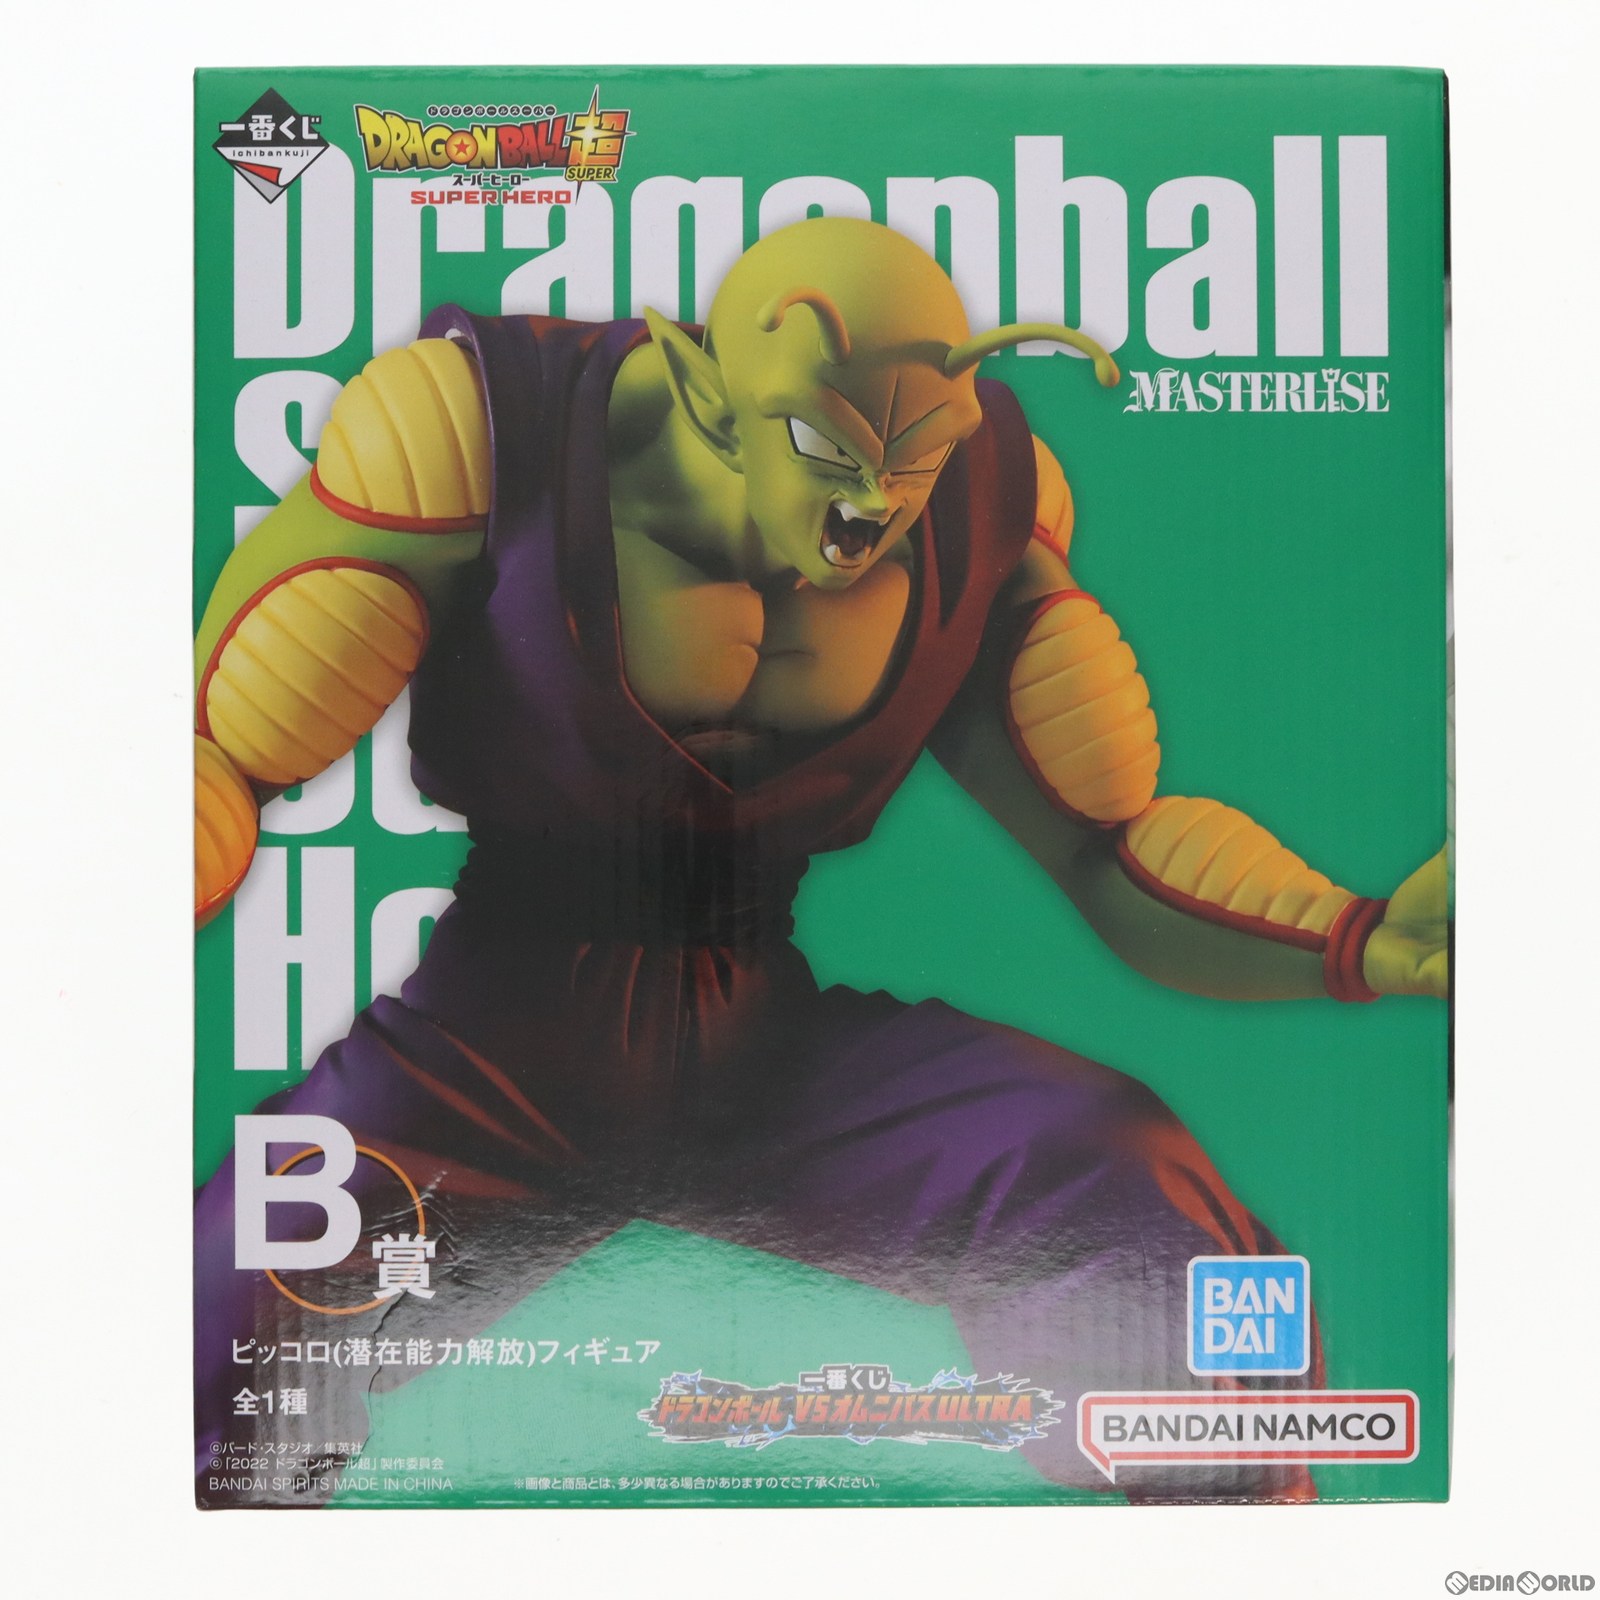 B賞 MASTERLISE ピッコロ(潜在能力解放) 一番くじ ドラゴンボール VSオムニバスULTRA ドラゴンボール超(スーパー) スーパーヒーロー フィギュア バンダイスピリッツ(20221015)